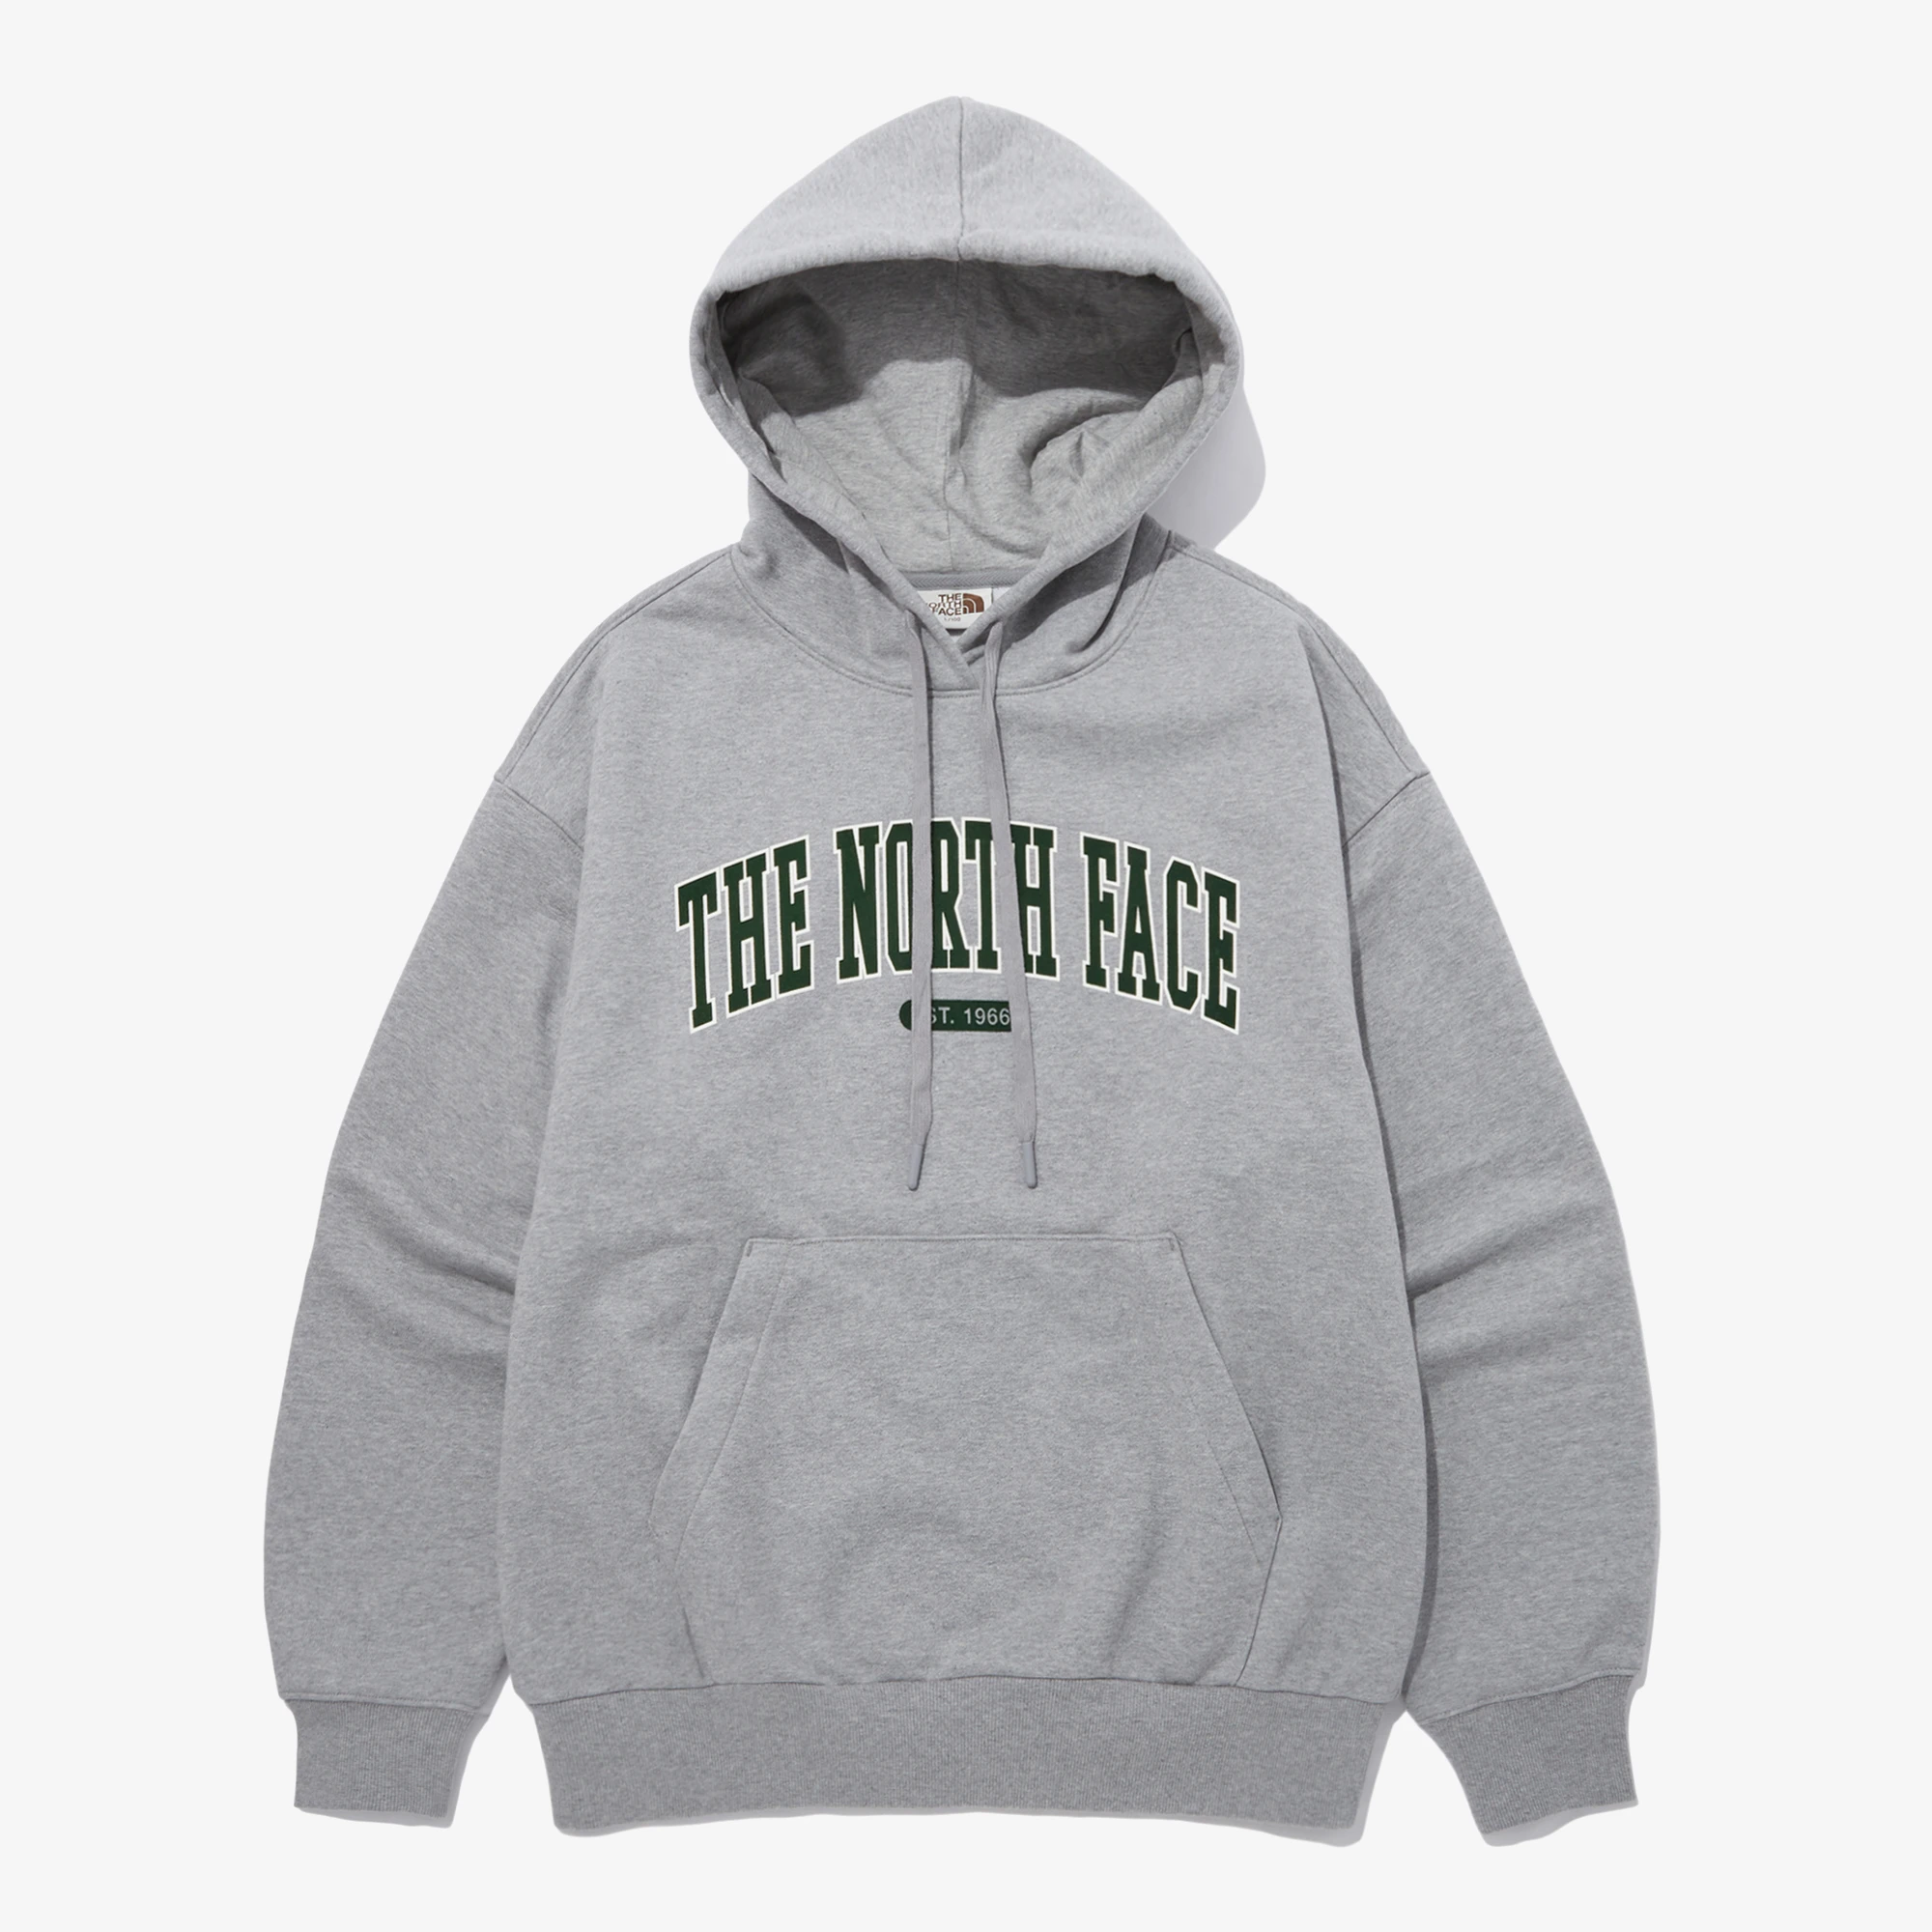 The North Face | 【Brilliant|北面特惠】北面拱形徽标连帽套头衫 ARCH LOGO HOOD PULLOVER MELANGE_GREY NM5PP50L 8折×额外9折, 包邮包税, 独家减免邮费, 额外九折